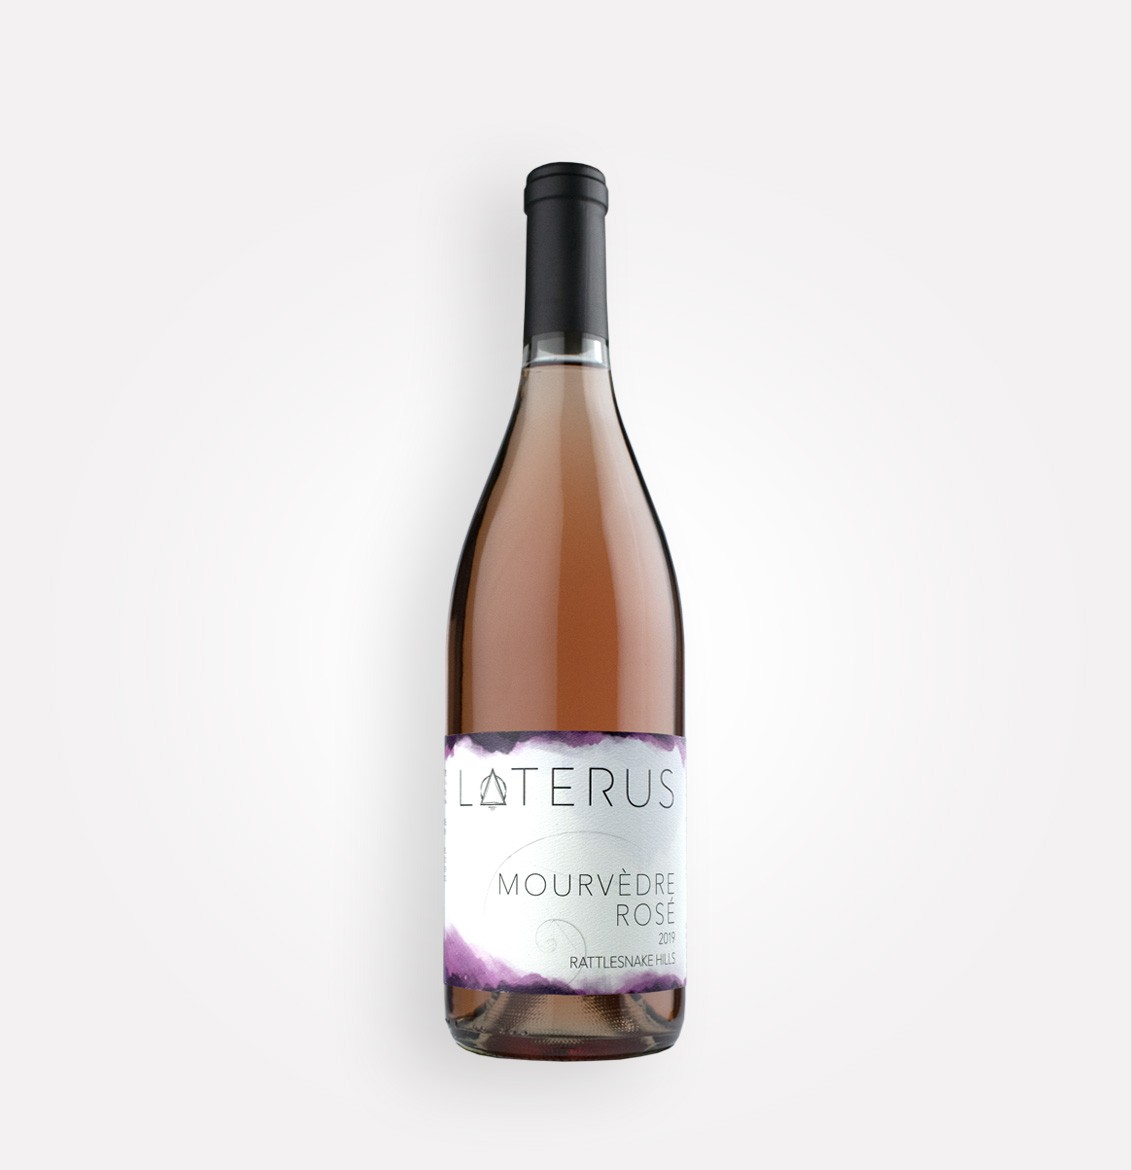 Bottle of Laterus 2019 Mourvèdre Rosé wine from Washington's Rattlesnake Hills AVA